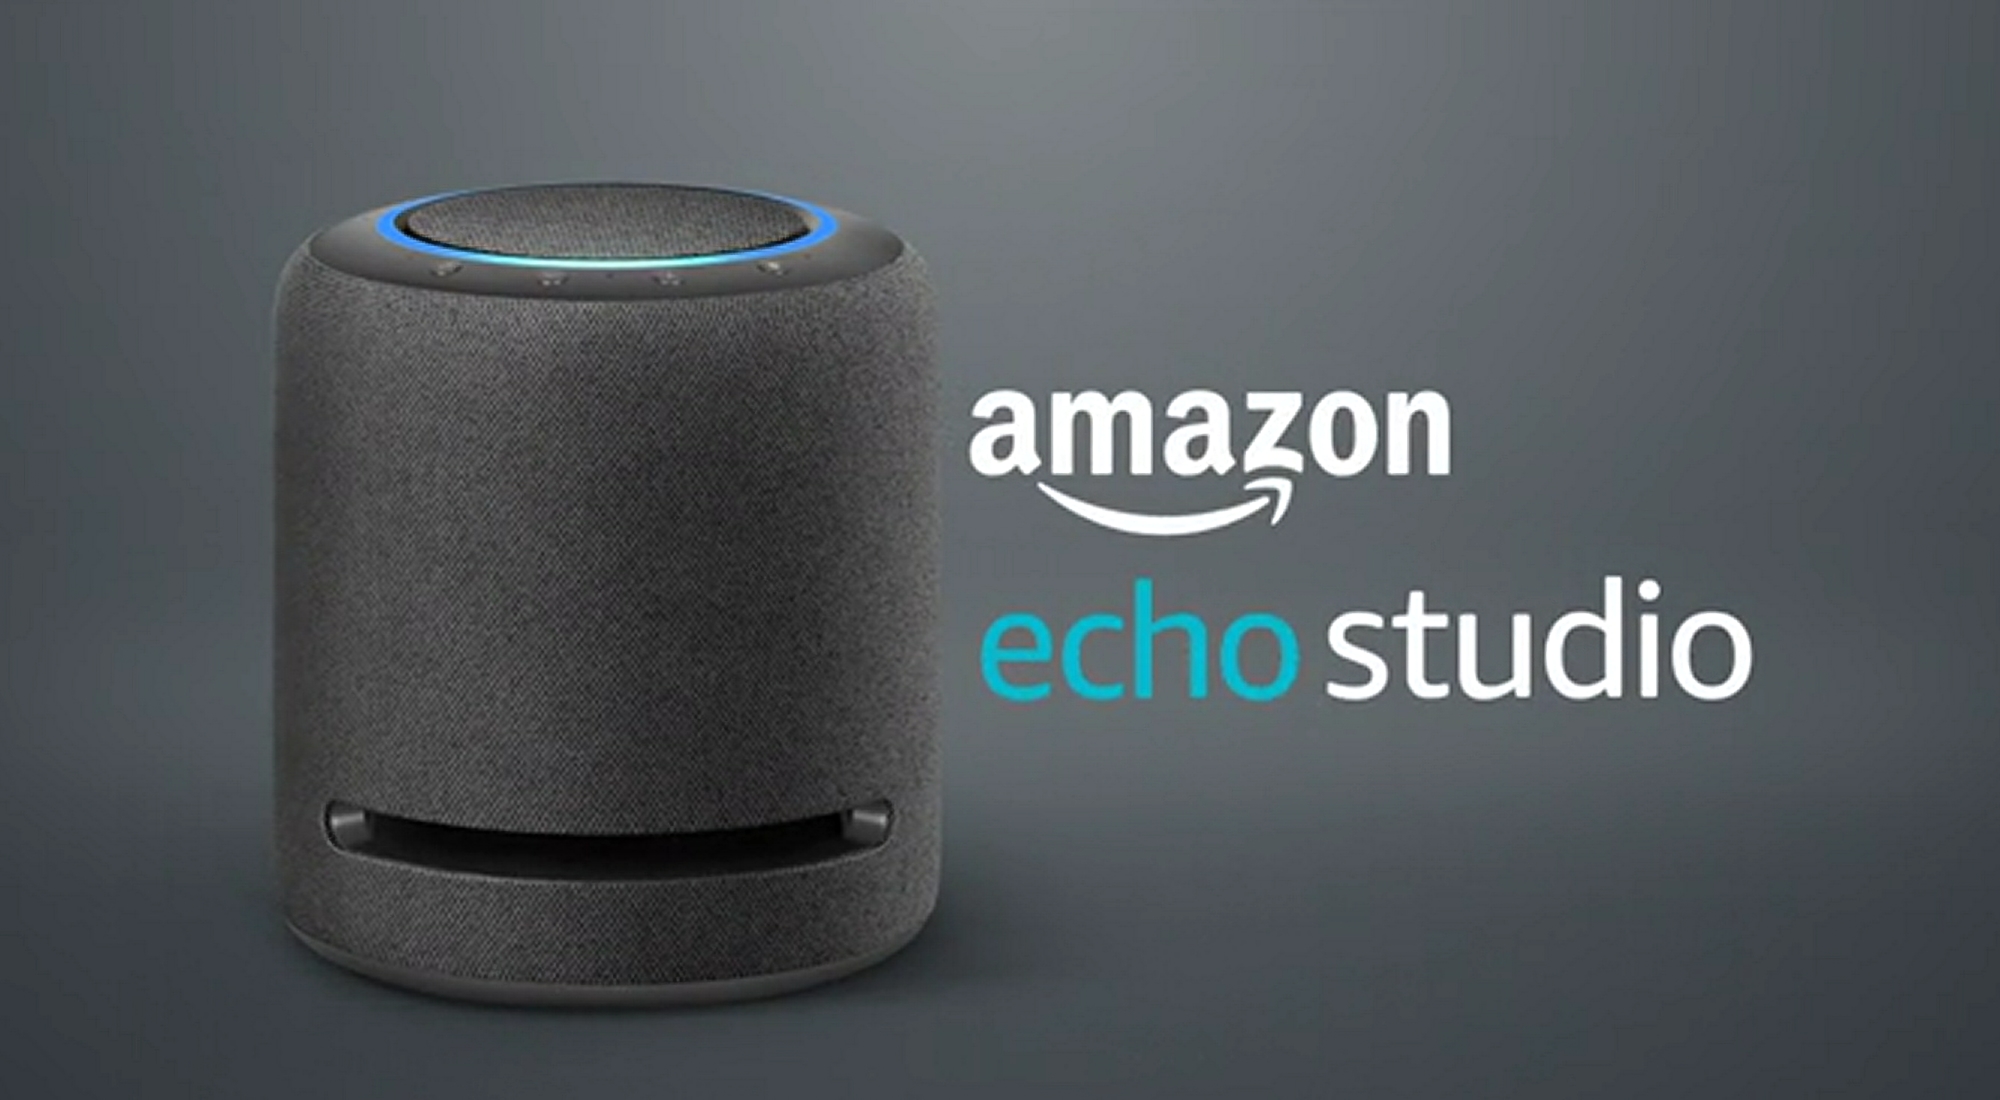 Rabatten er på 60 euro: Amazon Echo Studio med Spatial Audio-surroundsound til salg for 179 euro